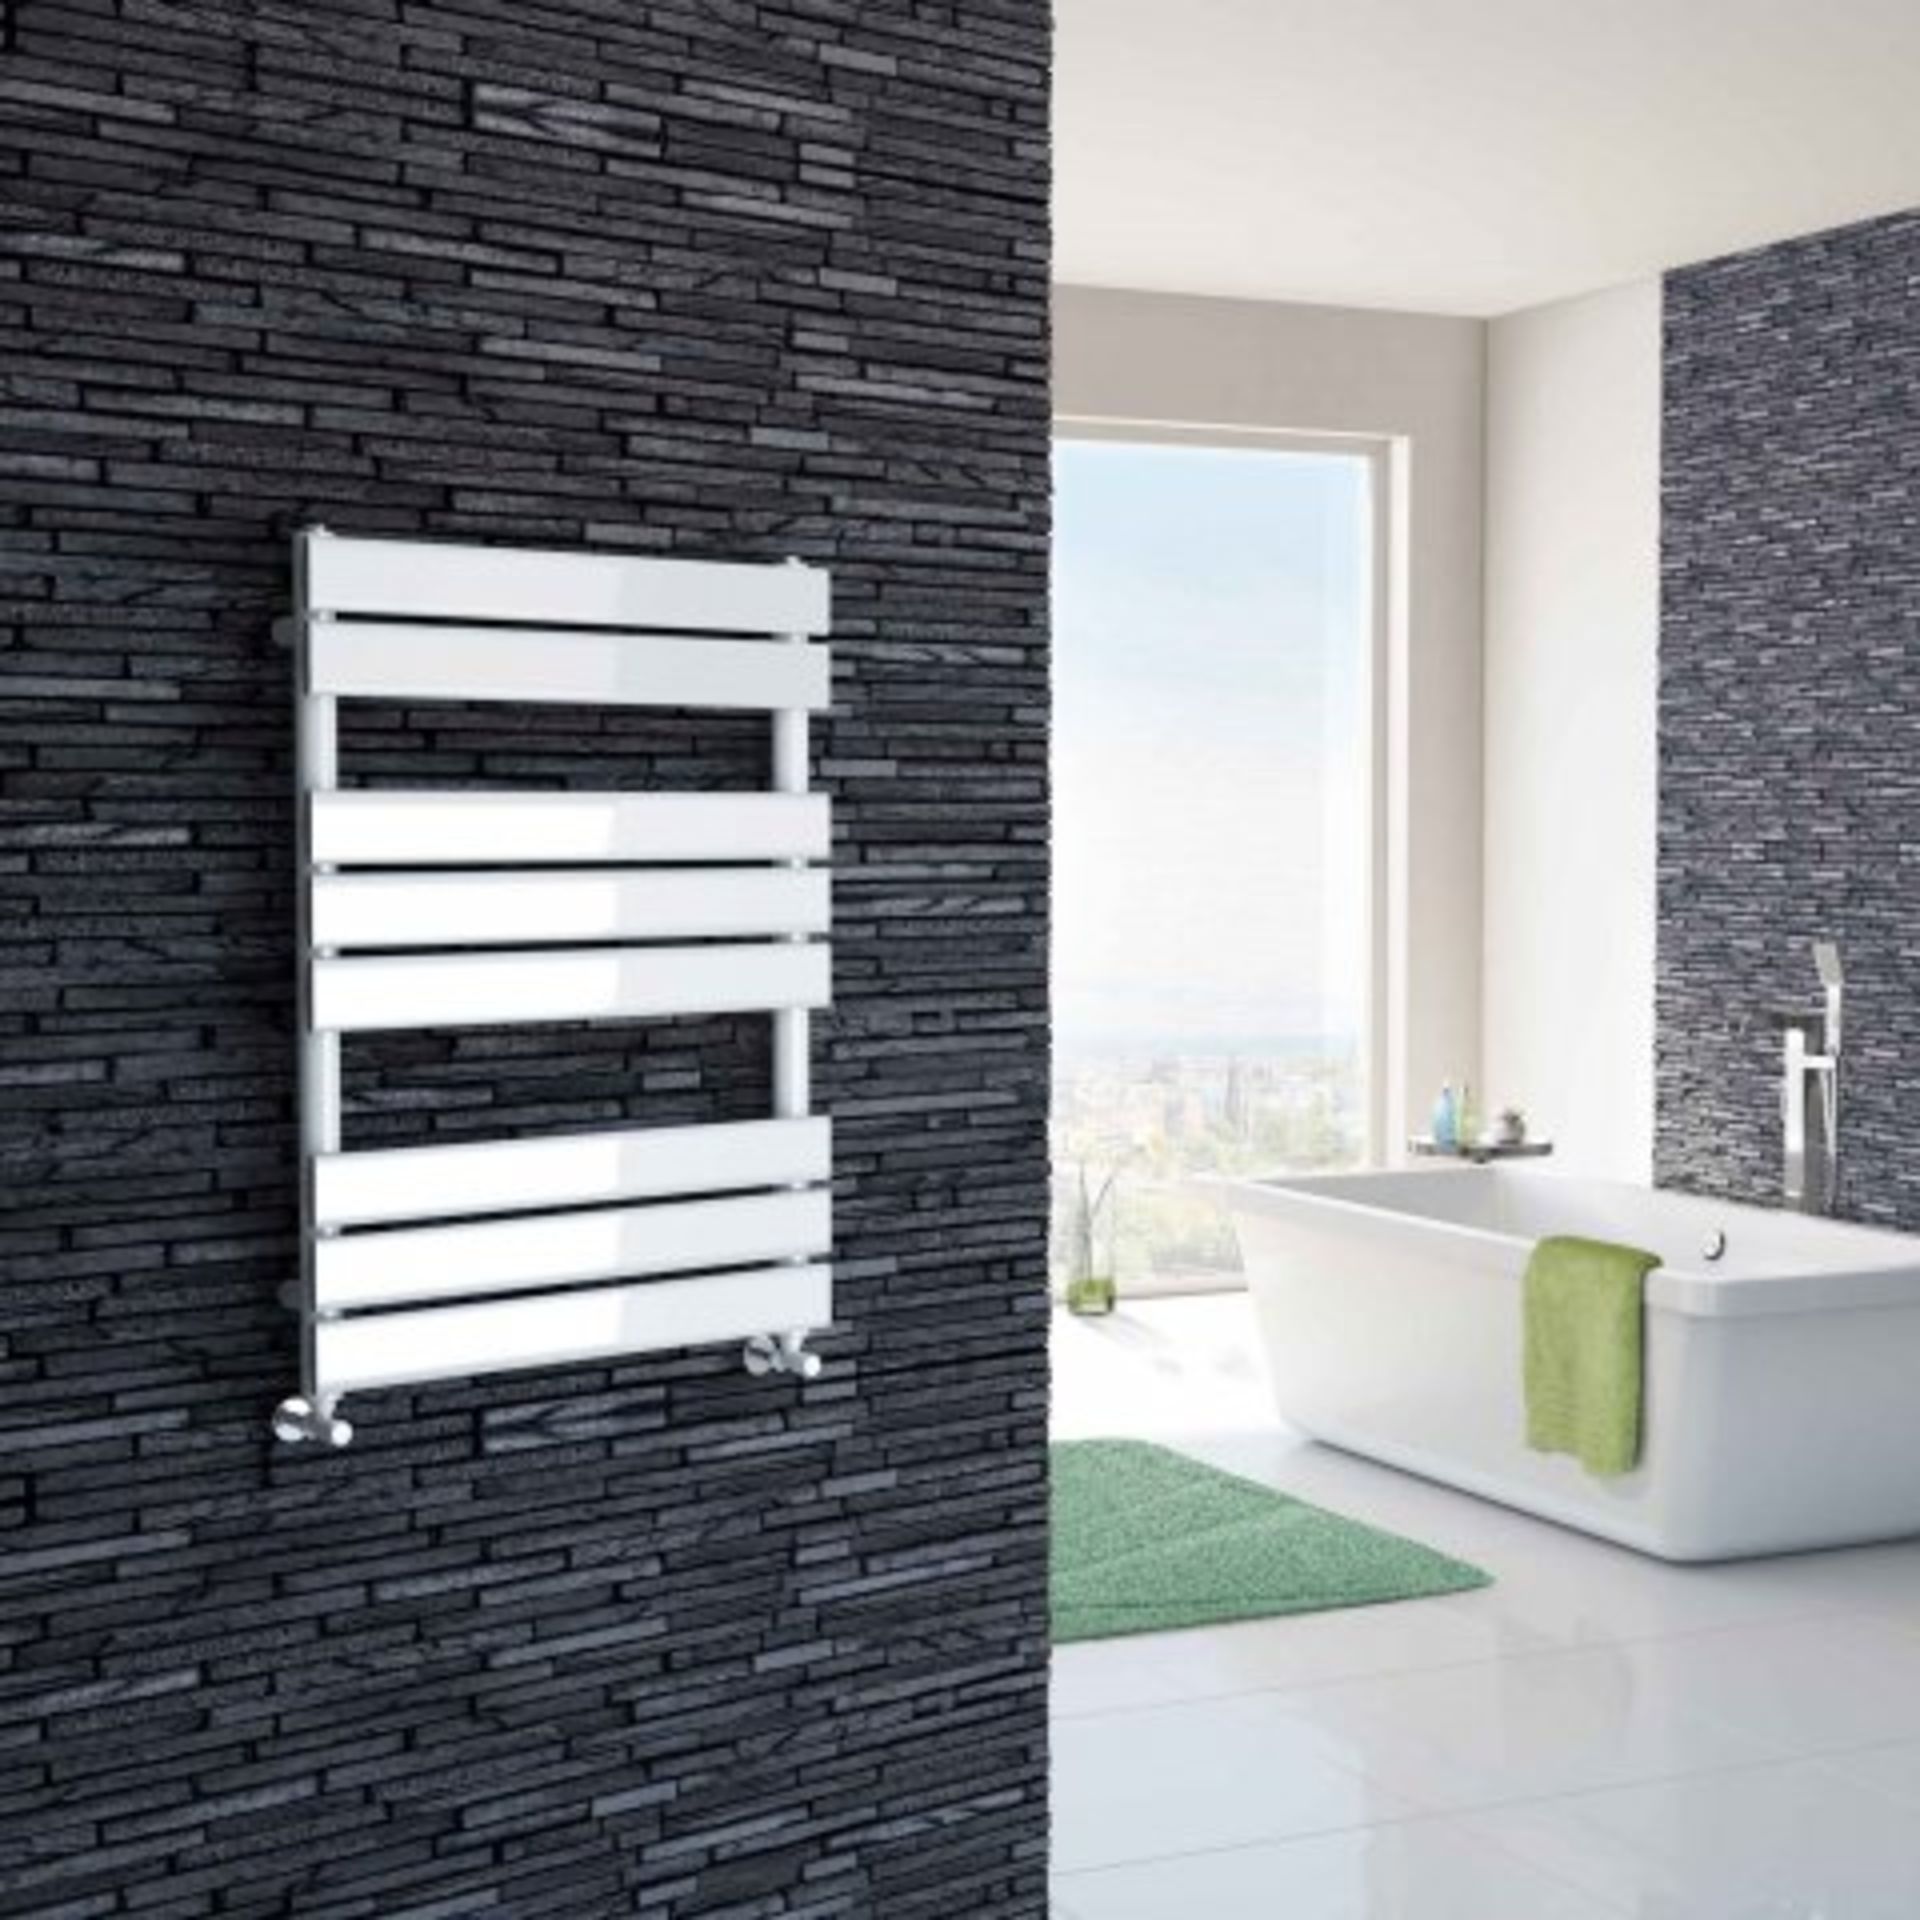 N6 - 800x600mm White Flat Panel Ladder Towel Radiator - Medina Premium. RRP £176.99. Stylishly sleek - Image 2 of 2